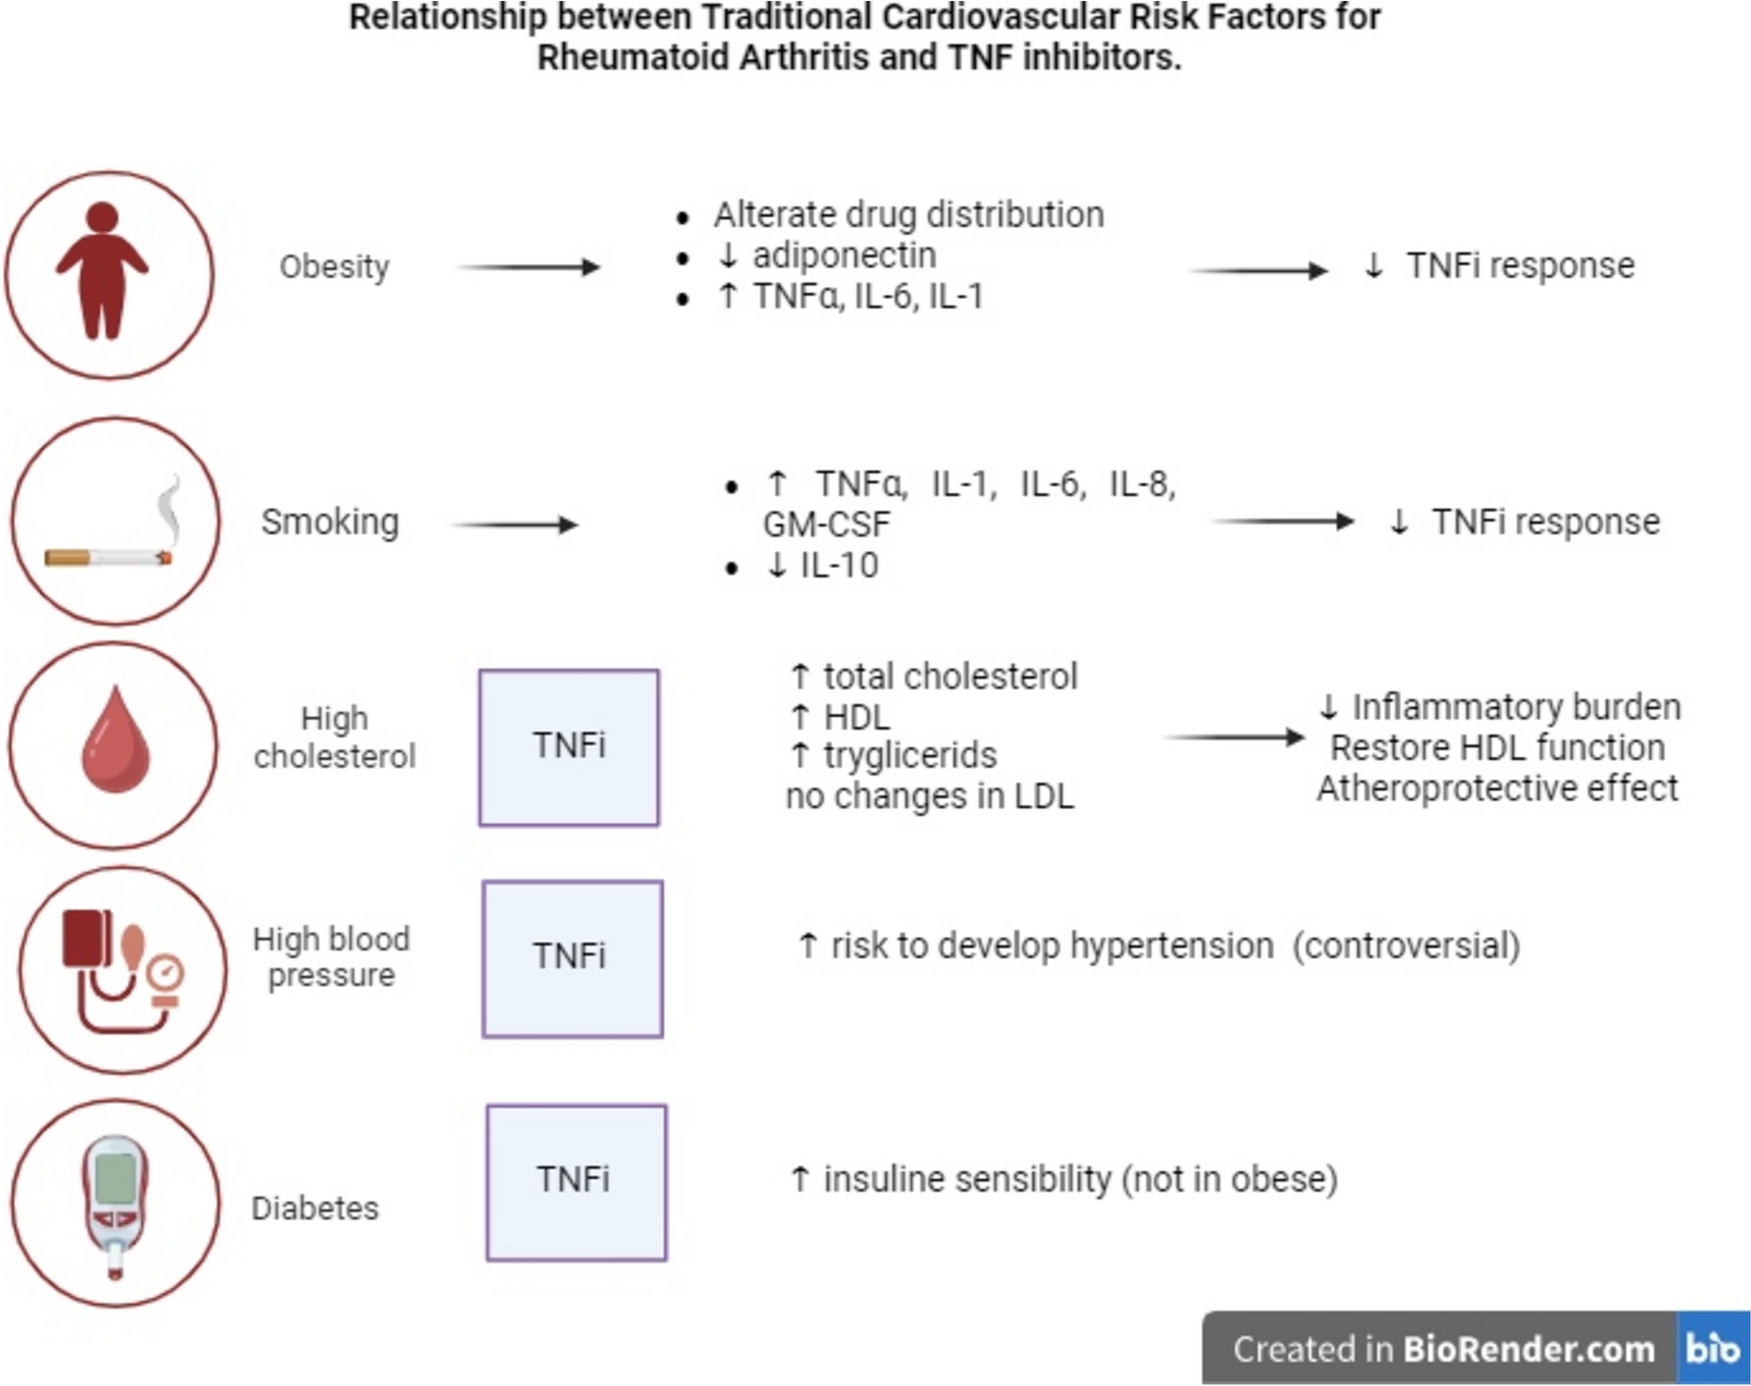 Tumor Necrosis Factor Alpha Inhibitors and Cardiovascular Risk in Rheumatoid Arthritis